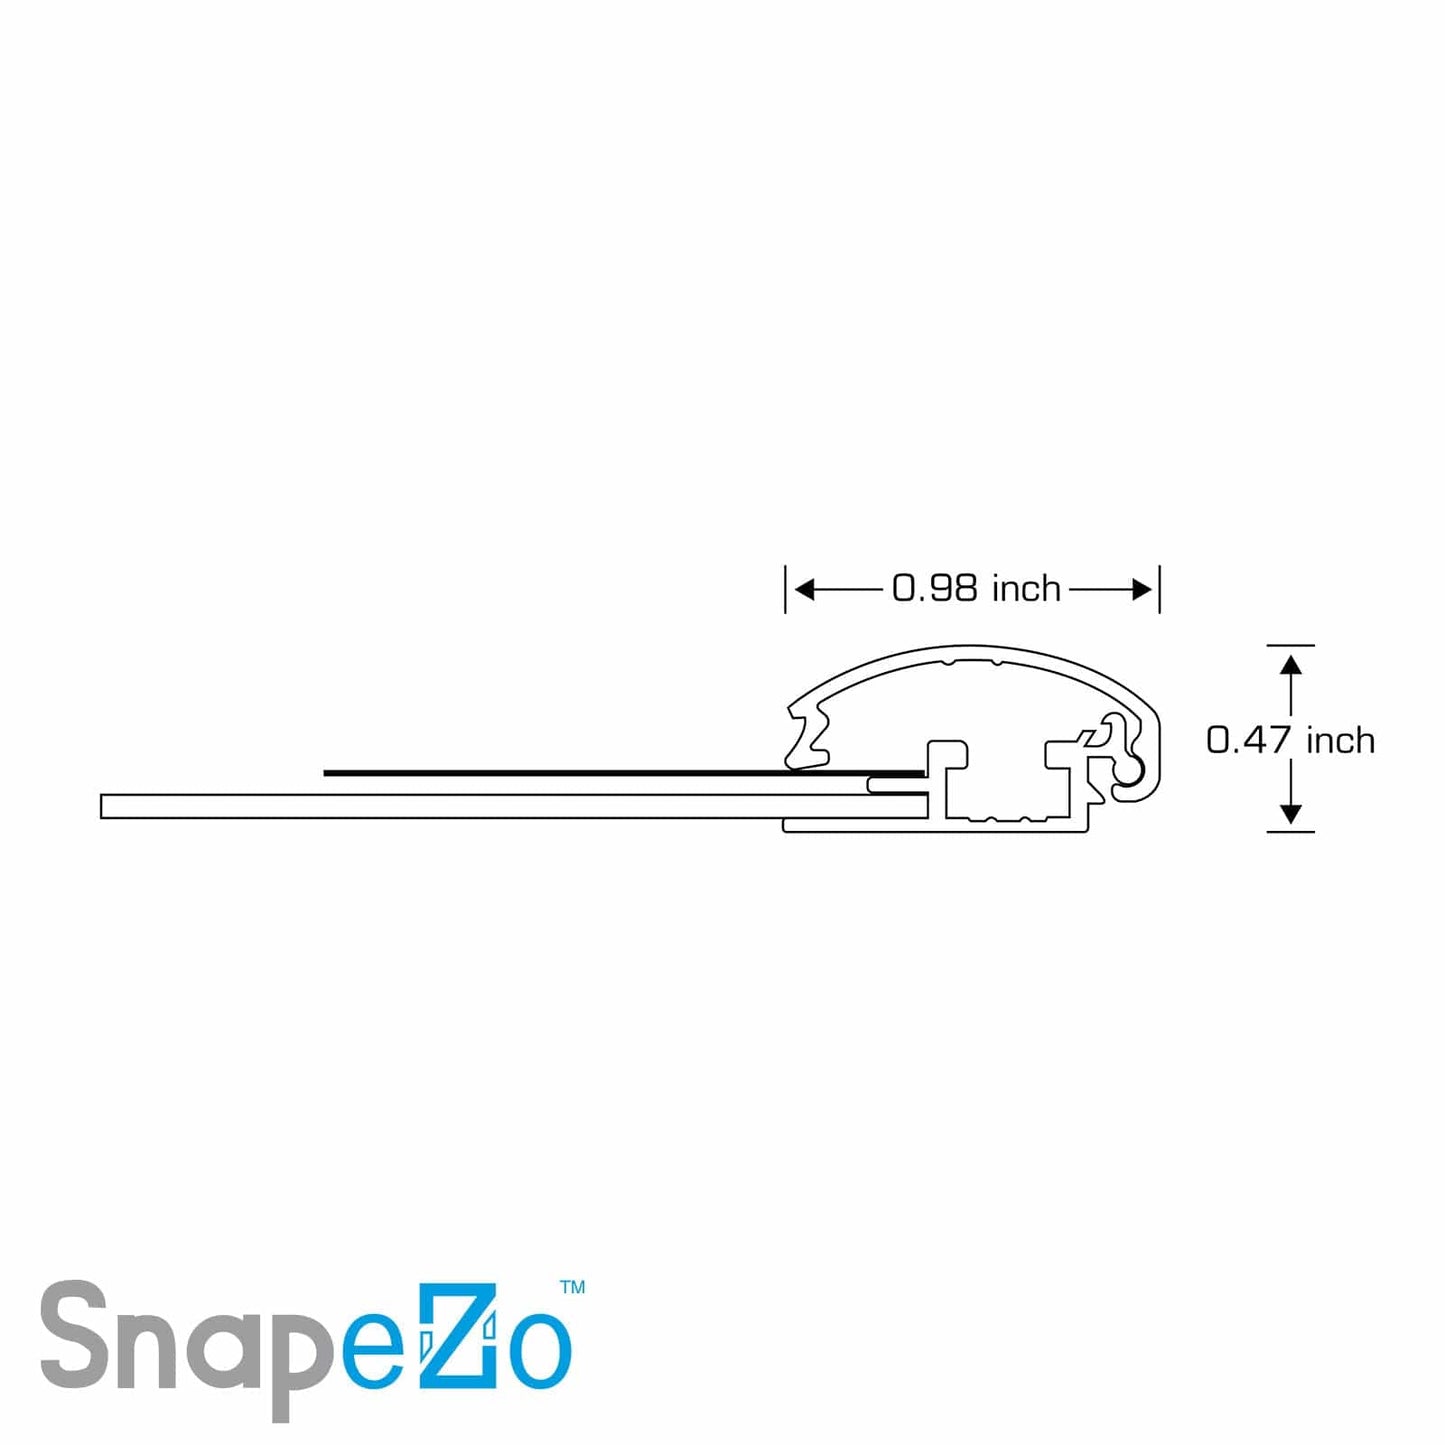 A3 White SnapeZo® Snap Frame - 1" Profile - Snap Frames Direct